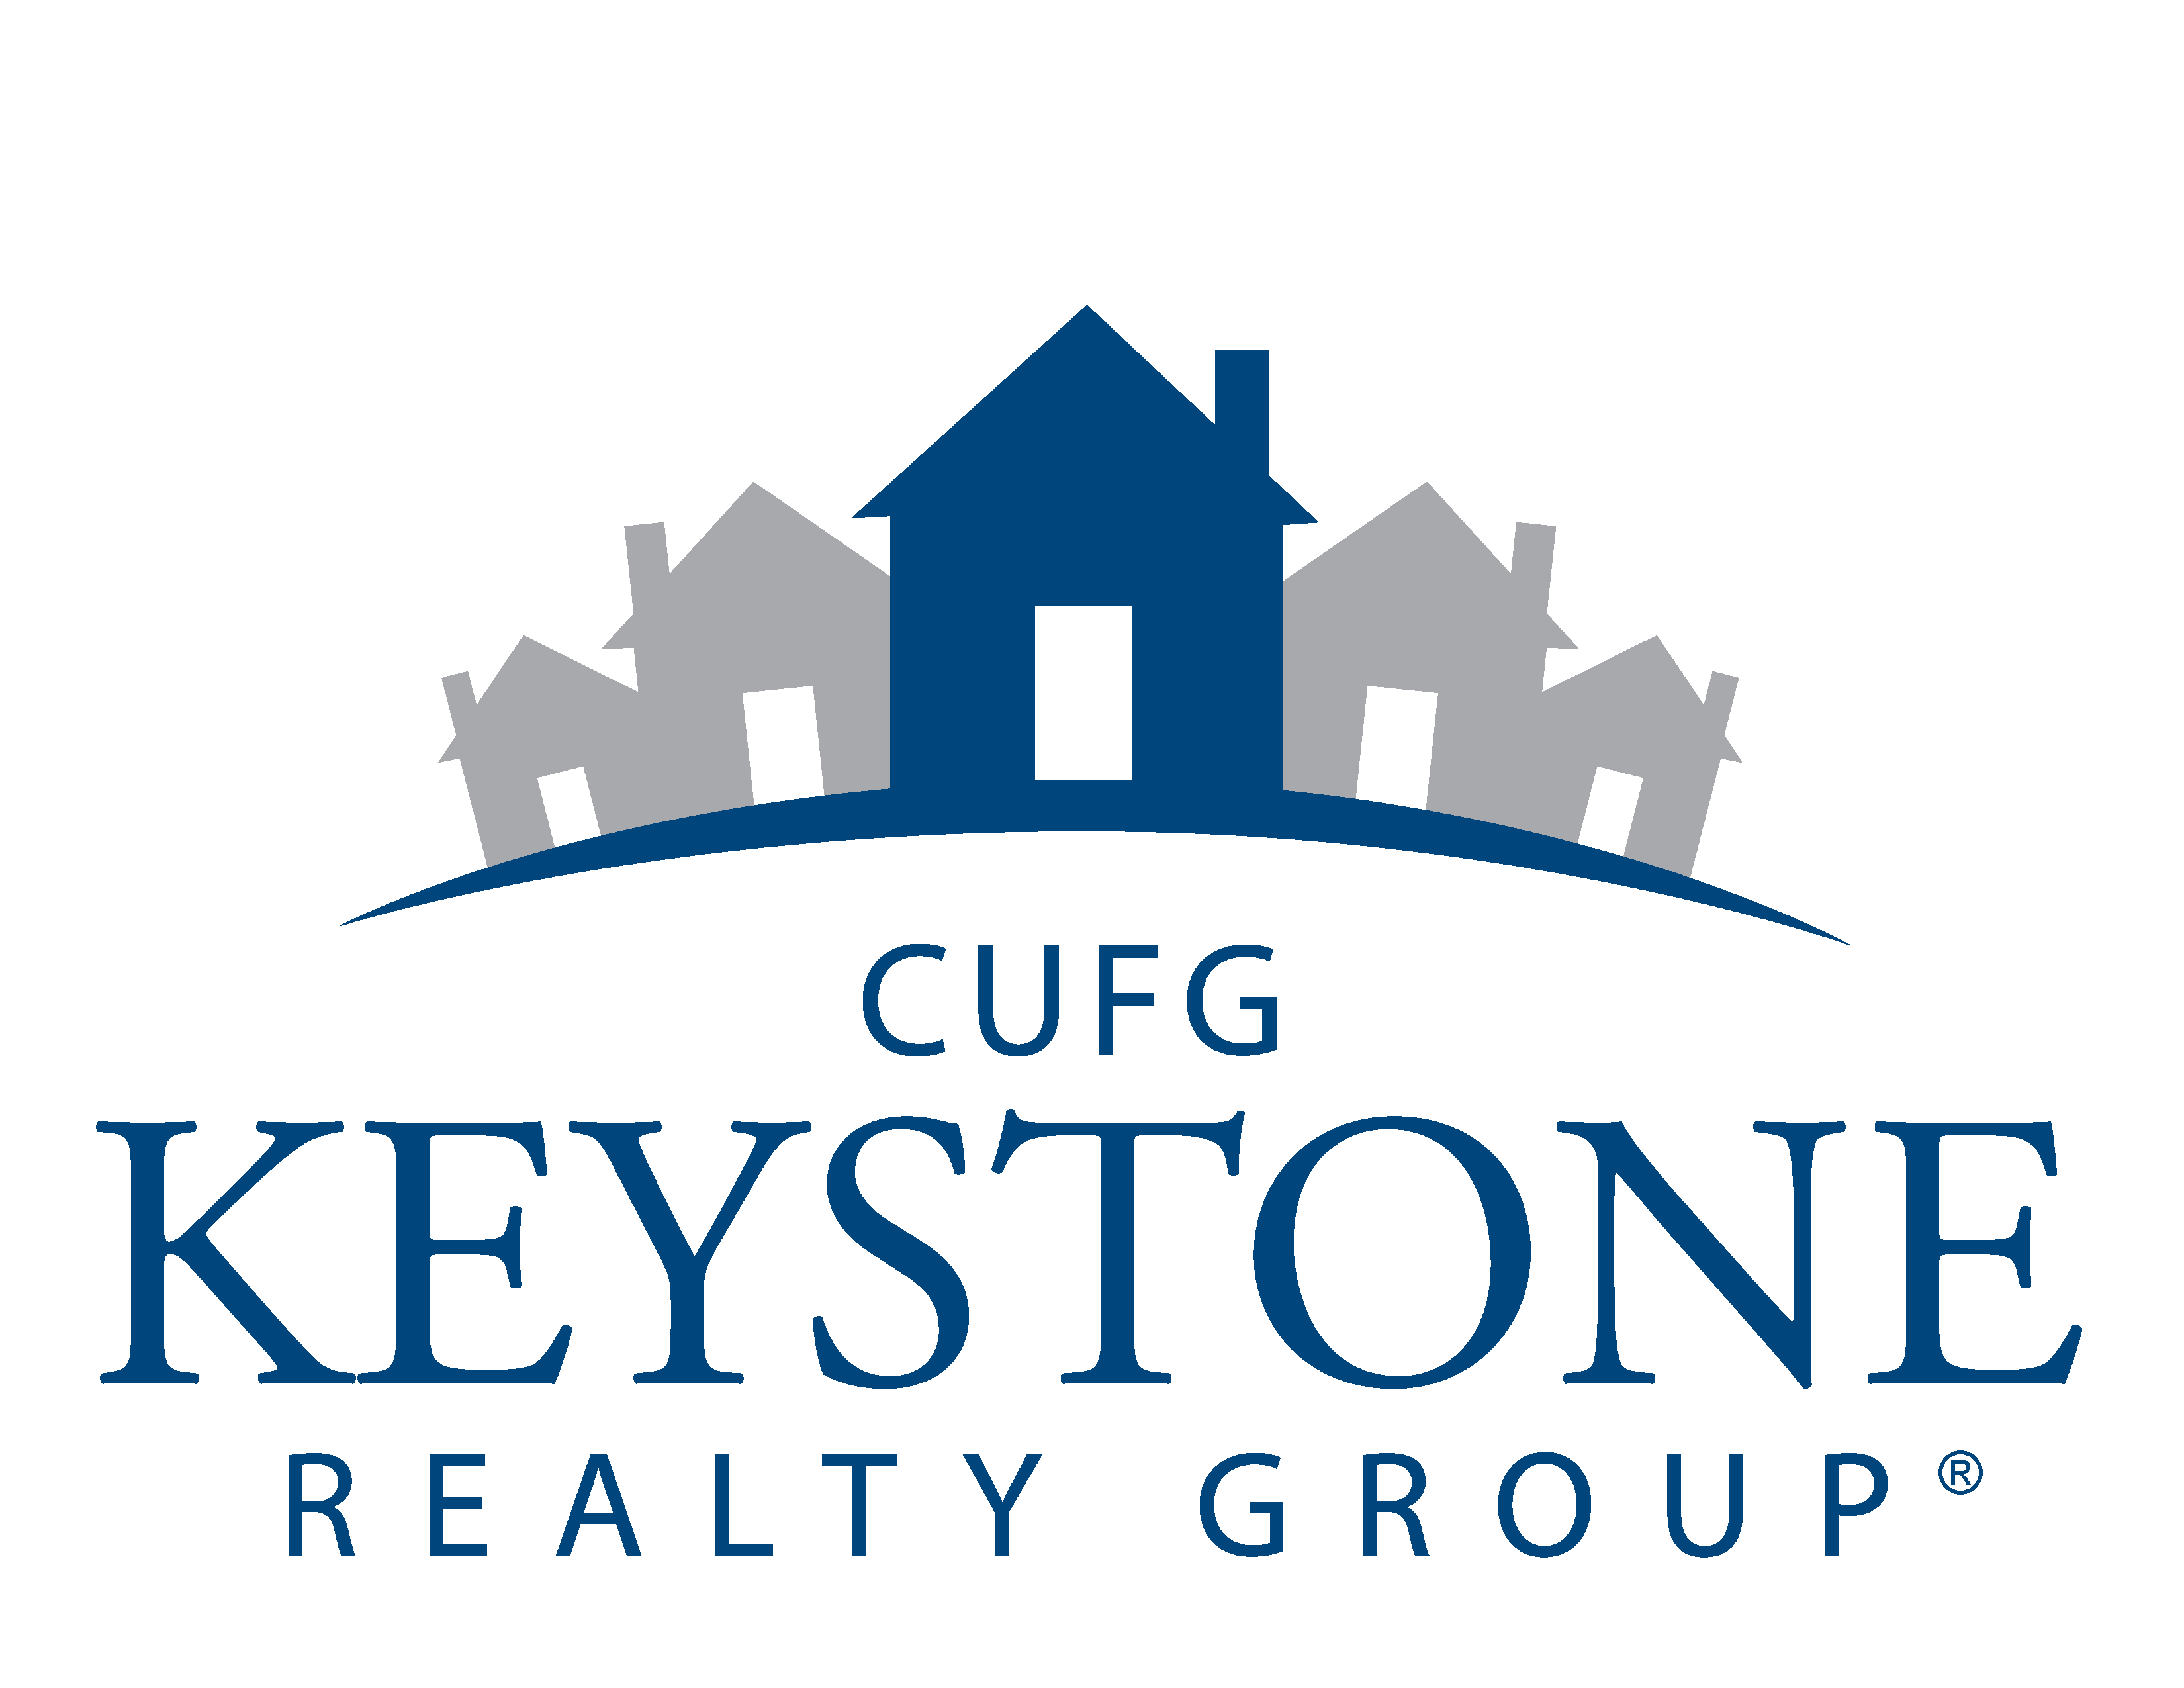 CUFG Keystone Realty Group